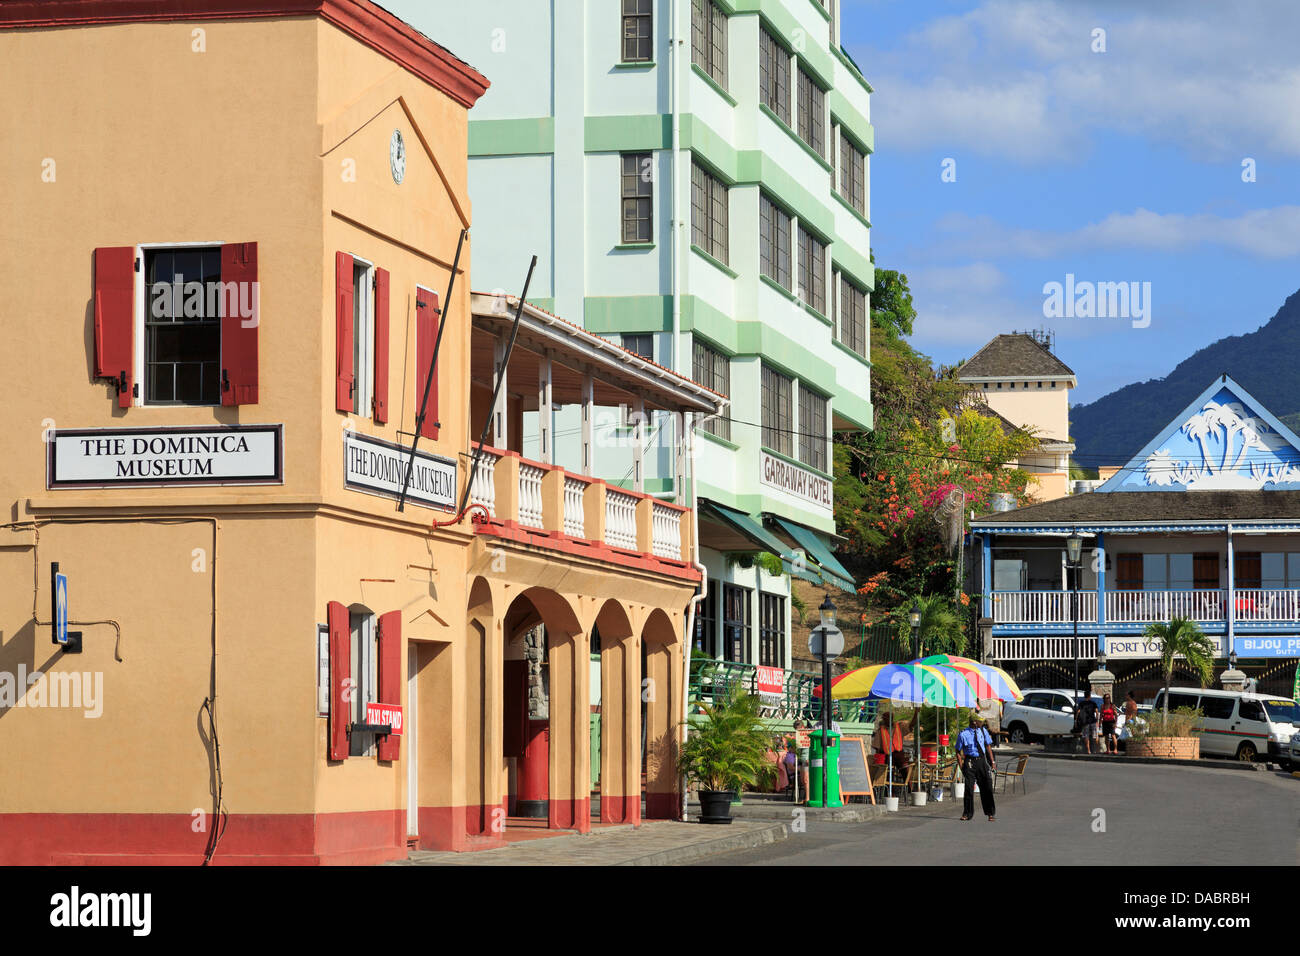 La Dominica Museum, Roseau, Dominica, isole Windward, West Indies, dei Caraibi e America centrale Foto Stock